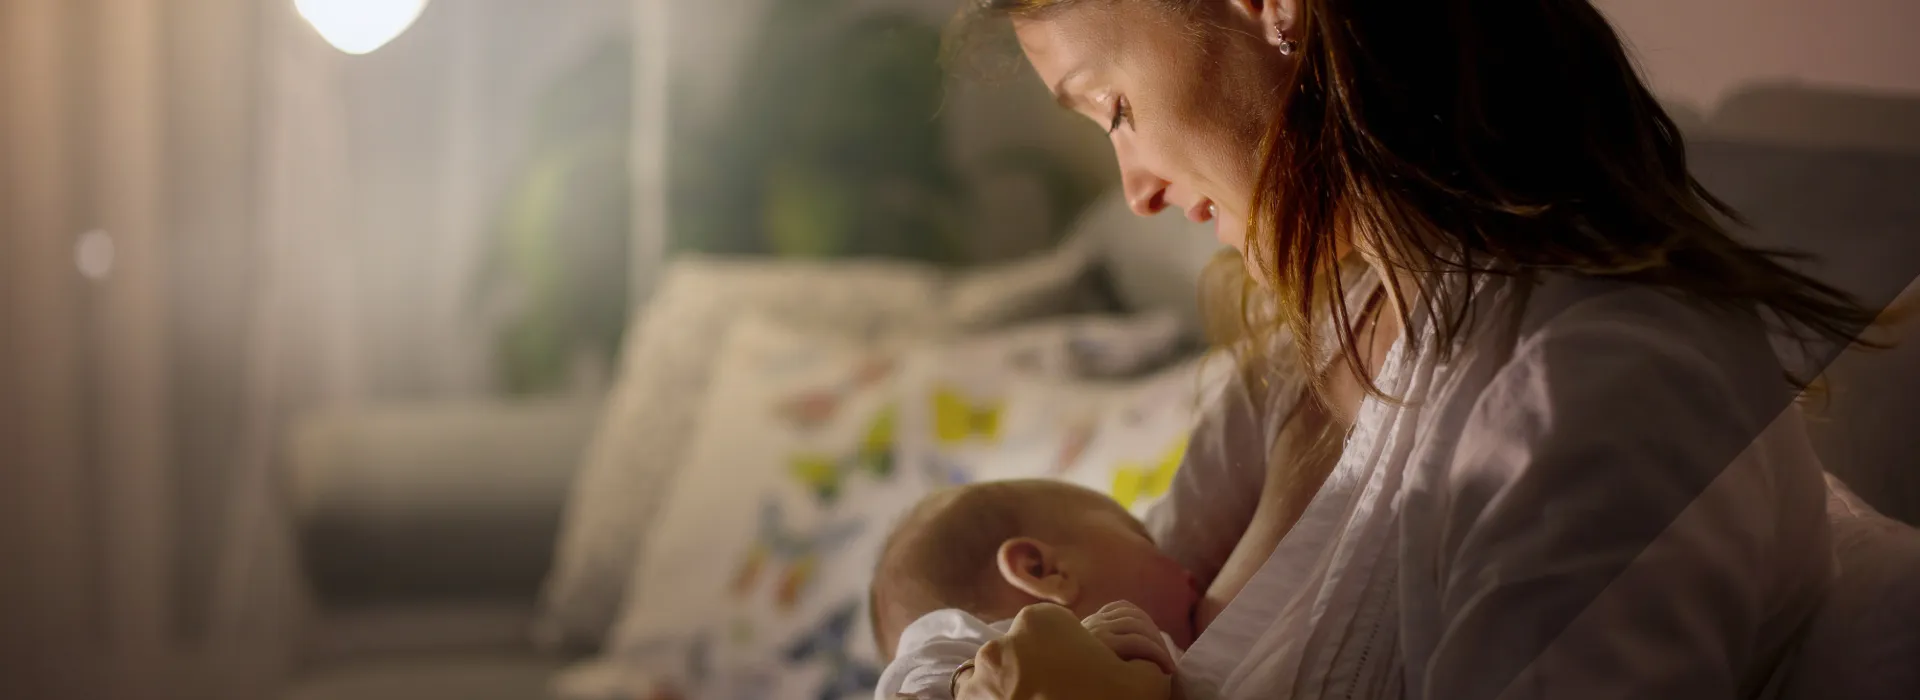 Diplomado online en Asesoría en lactancia materna